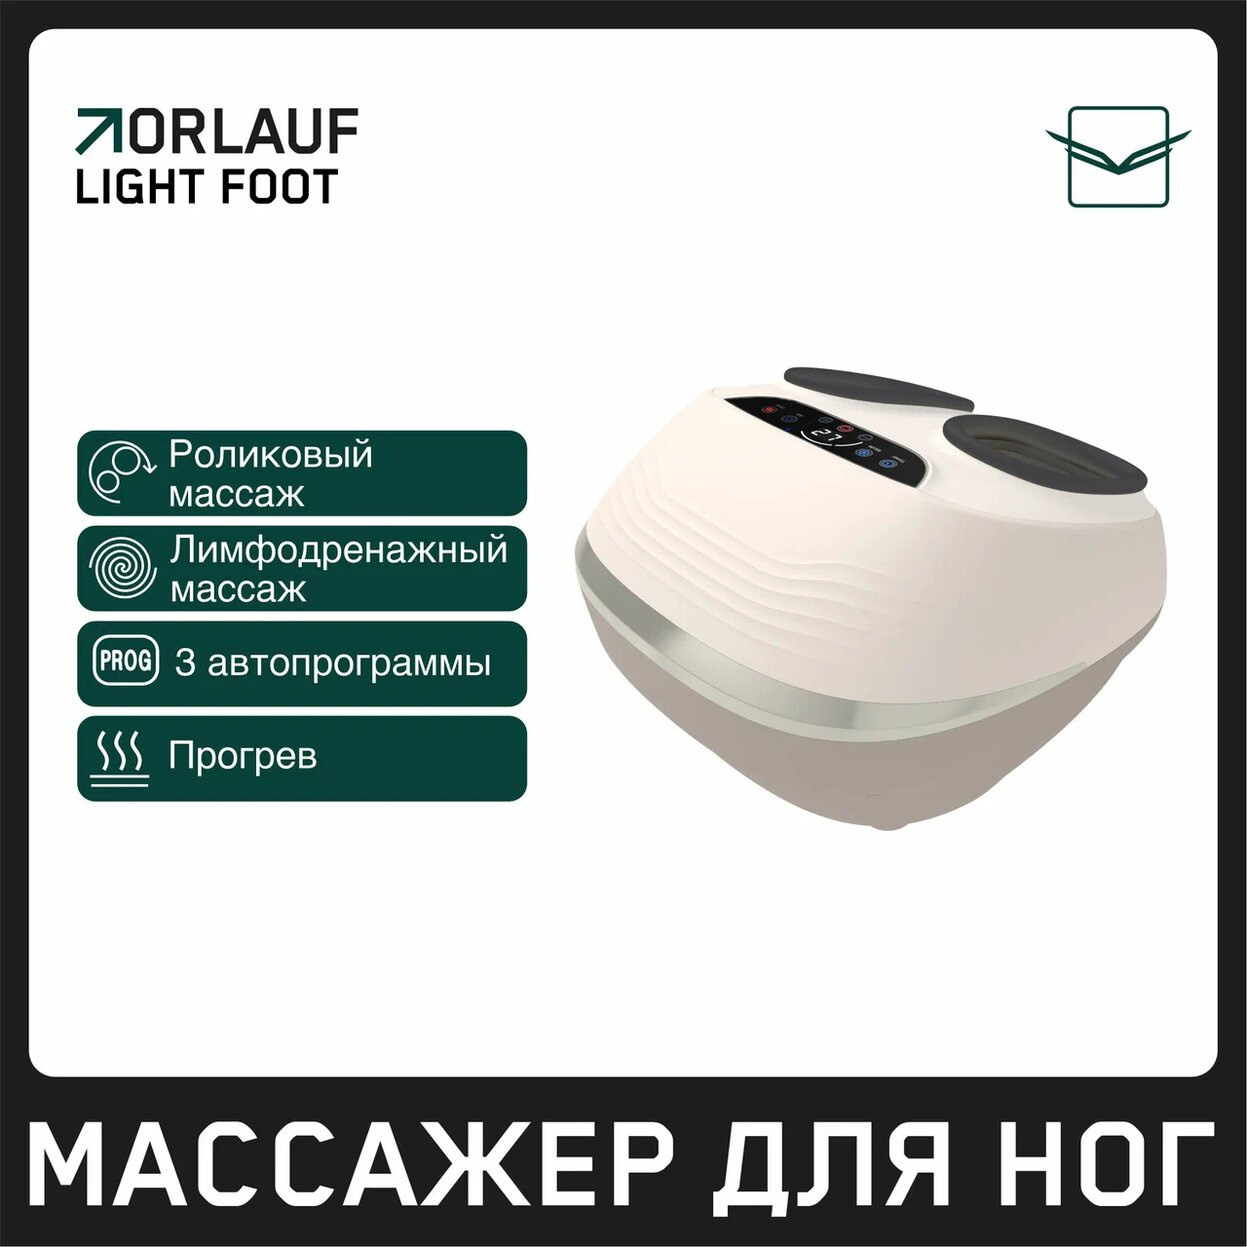 Orlauf Light Foot из каталога массажеров в Казани по цене 18900 ₽